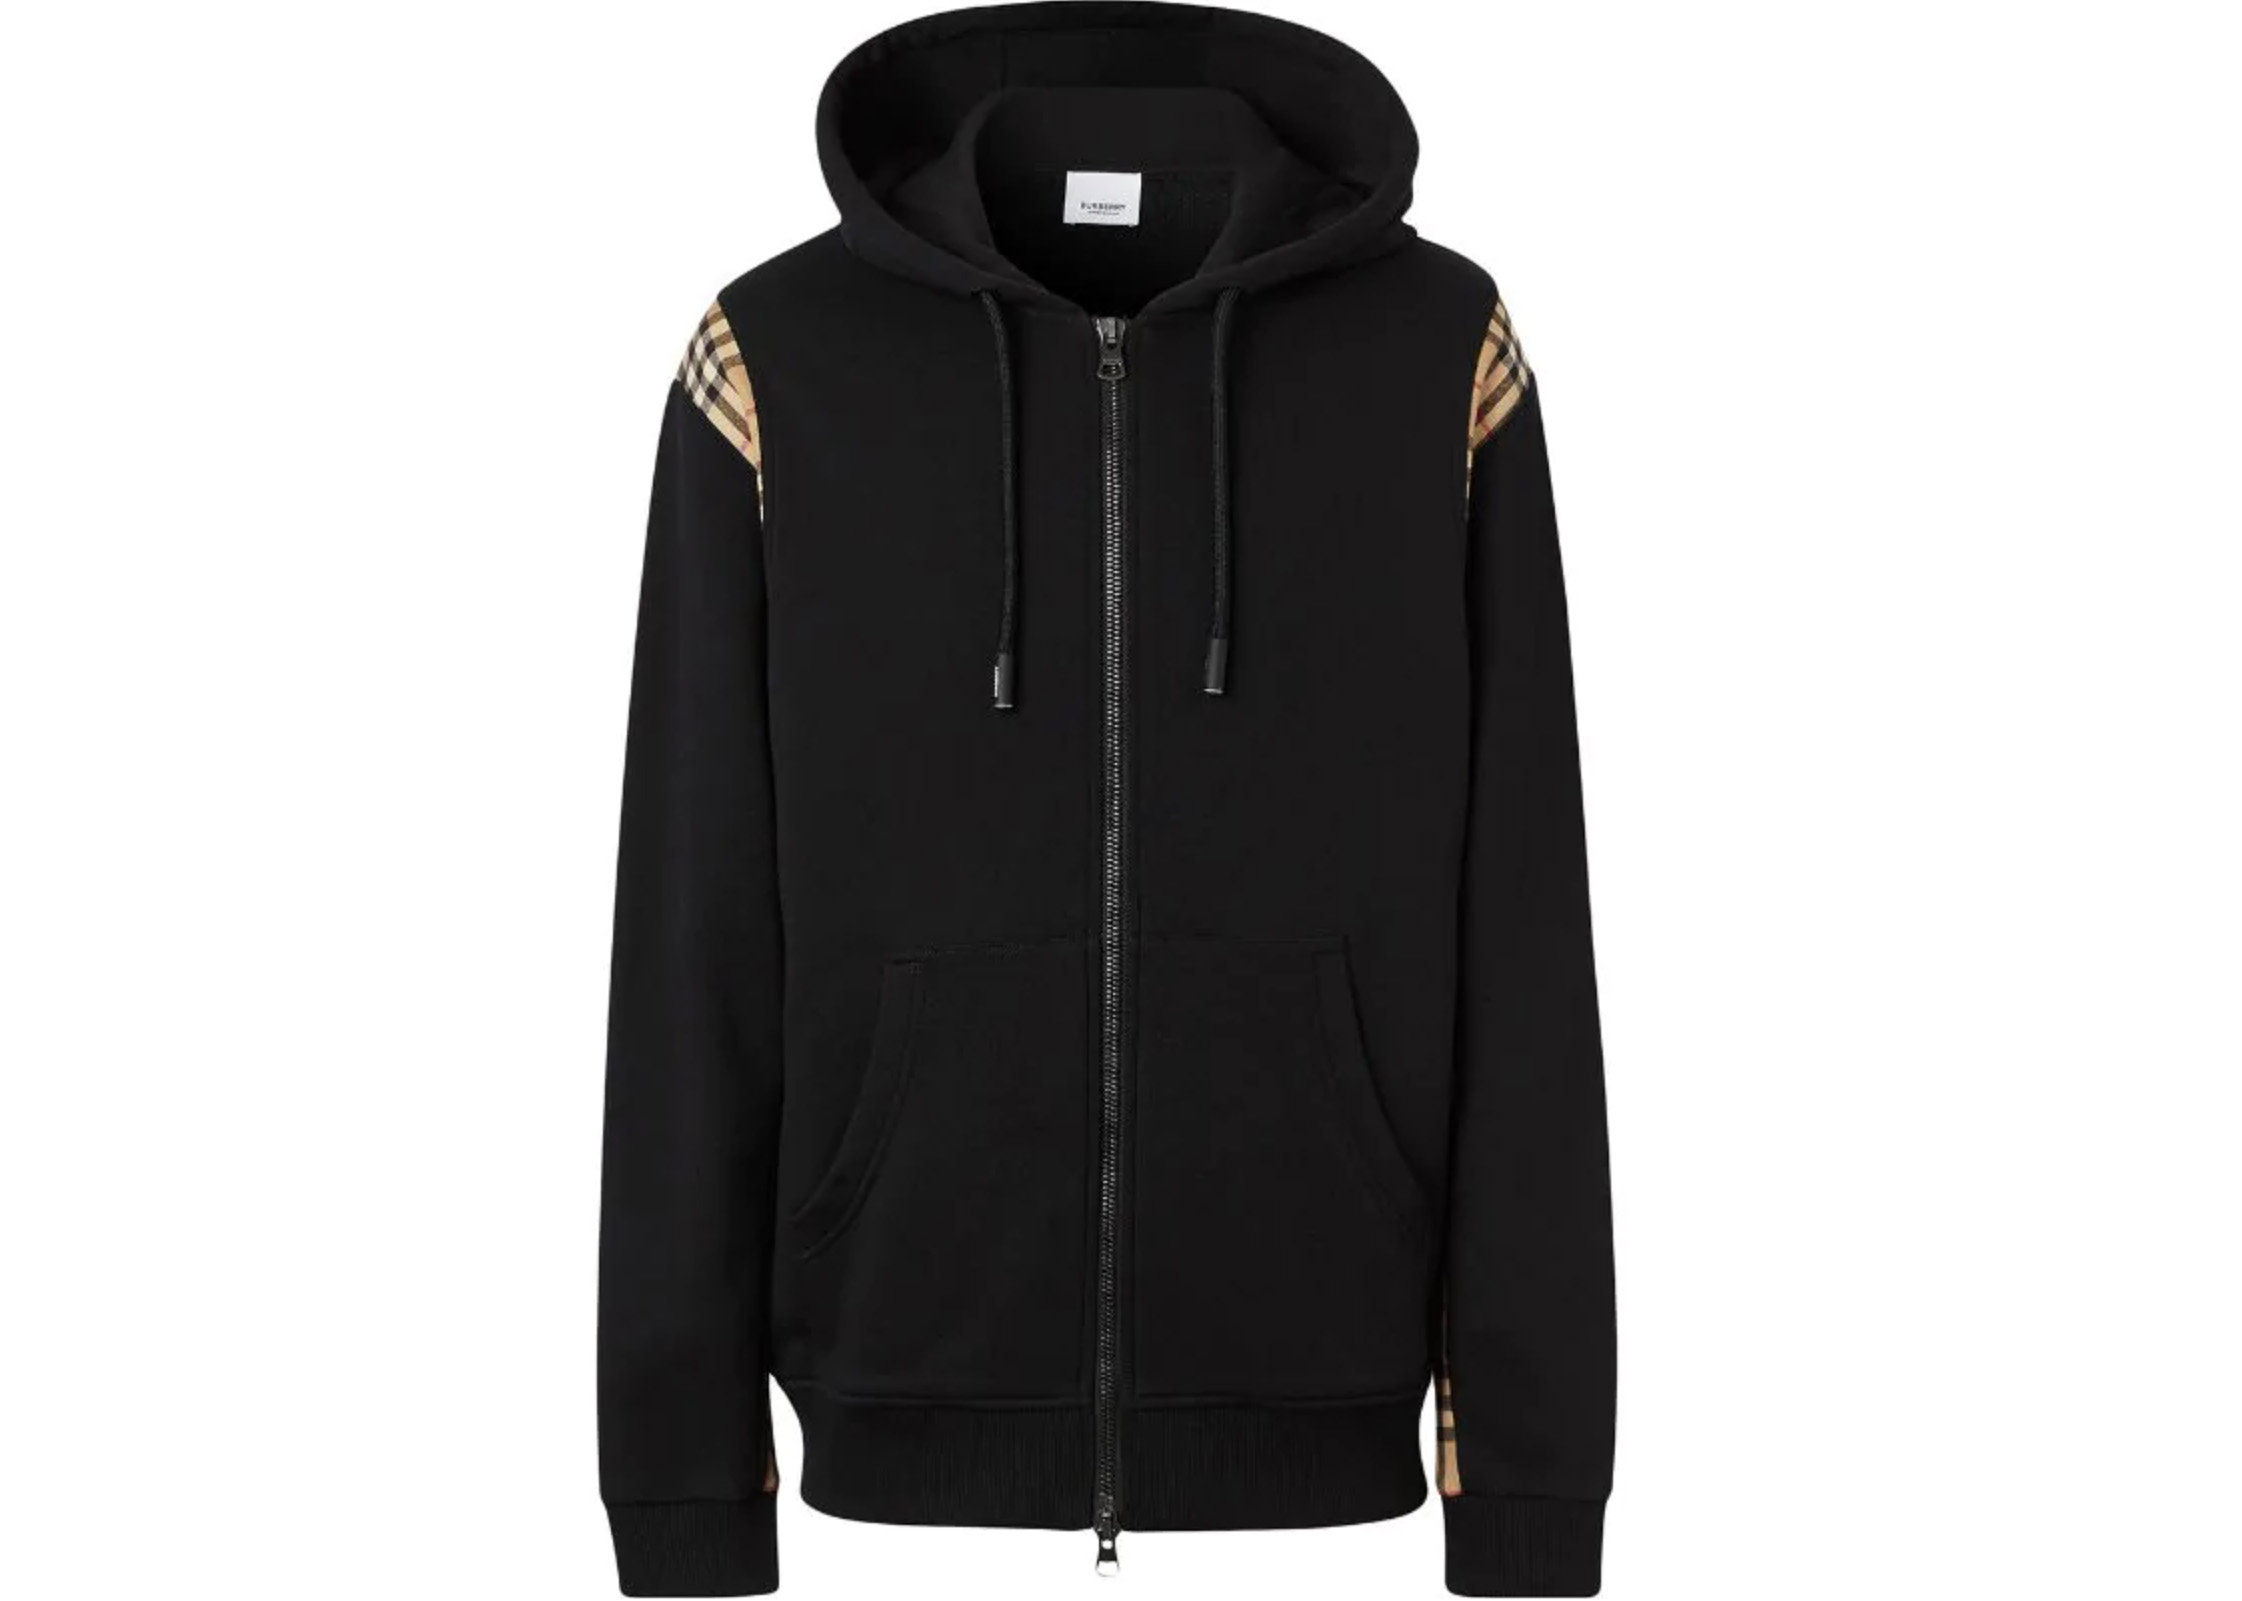 Burberry check-print panelled hoodie - Black